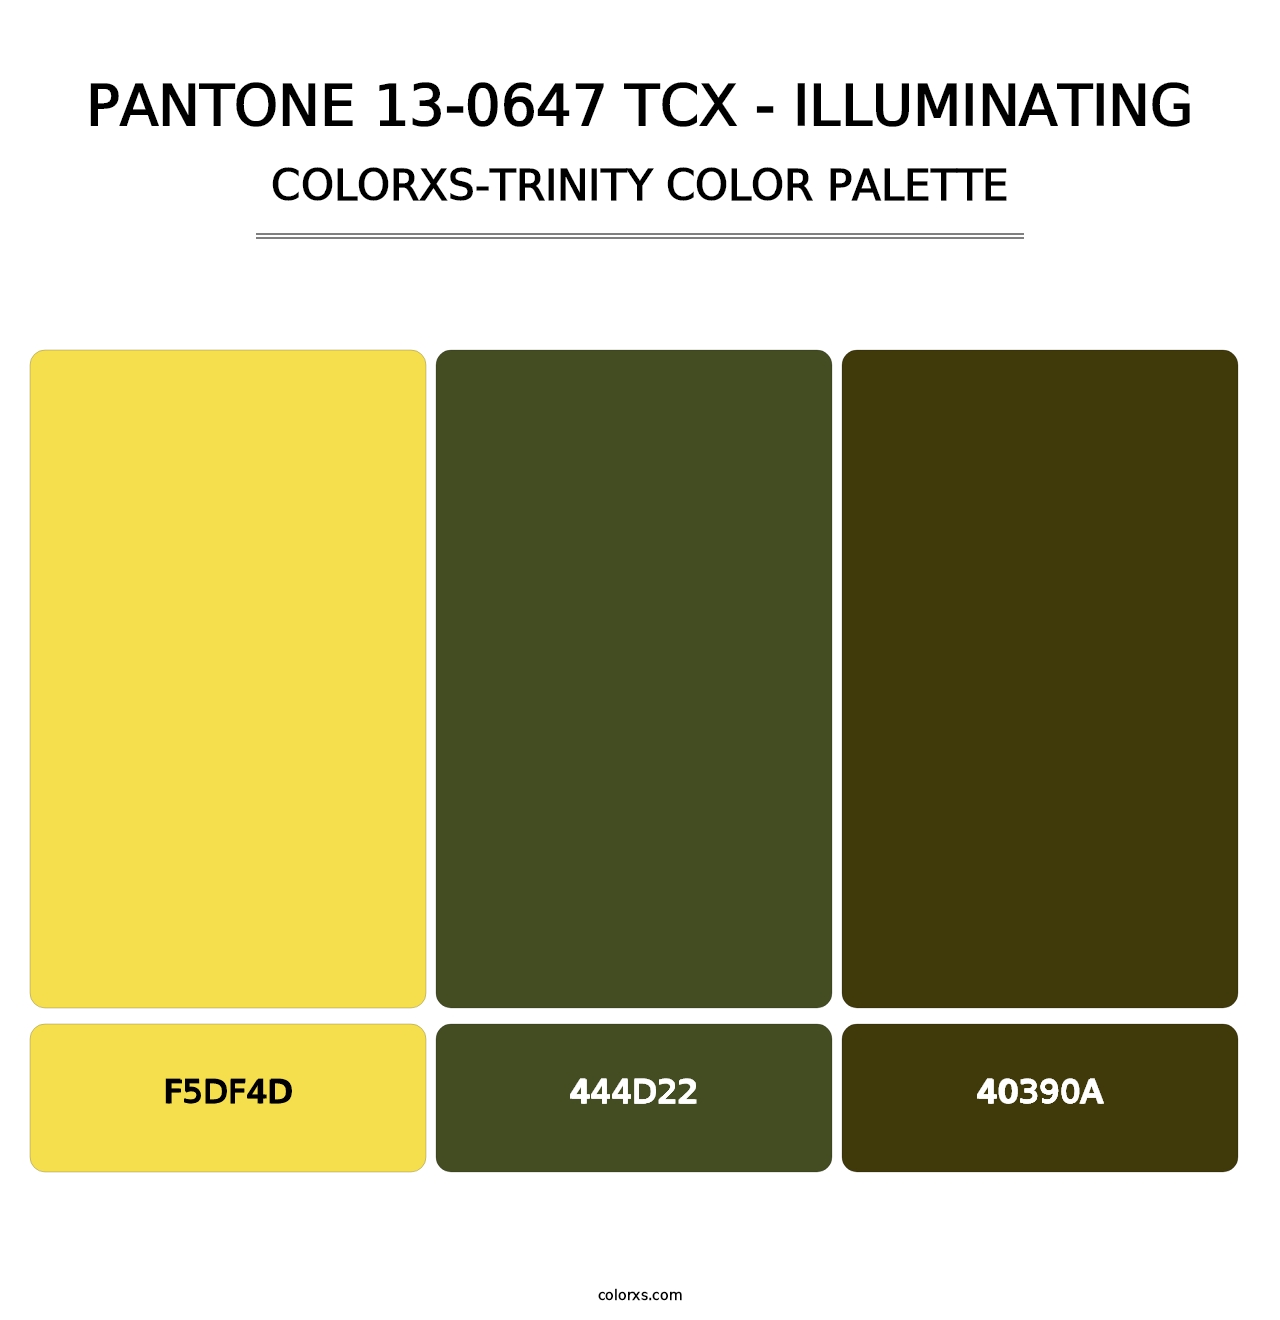 PANTONE 13-0647 TCX - Illuminating - Colorxs Trinity Palette